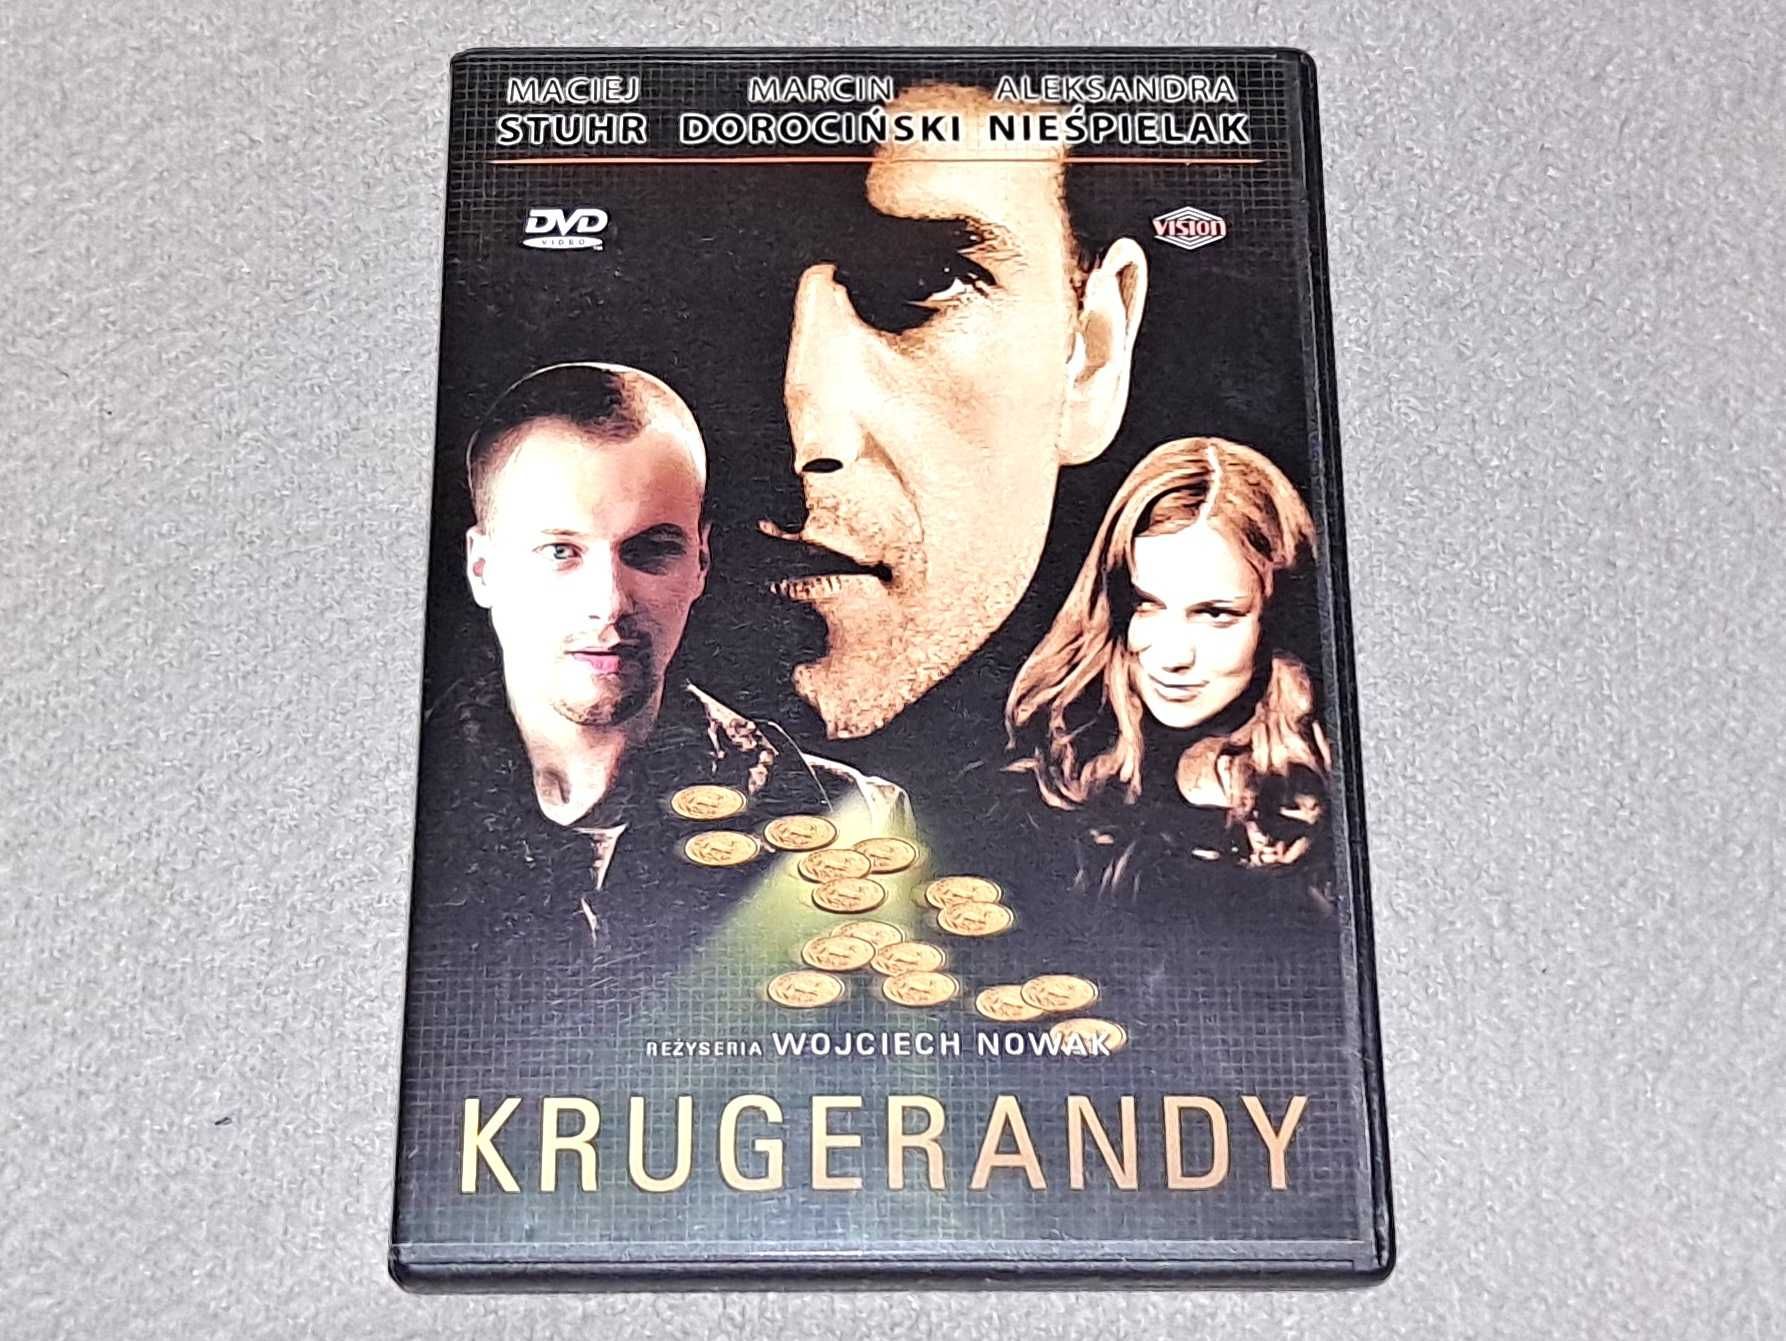 film na DVD prod. polskiej "KRUGERANDY" z Marcinem Dorocińskim (1999)